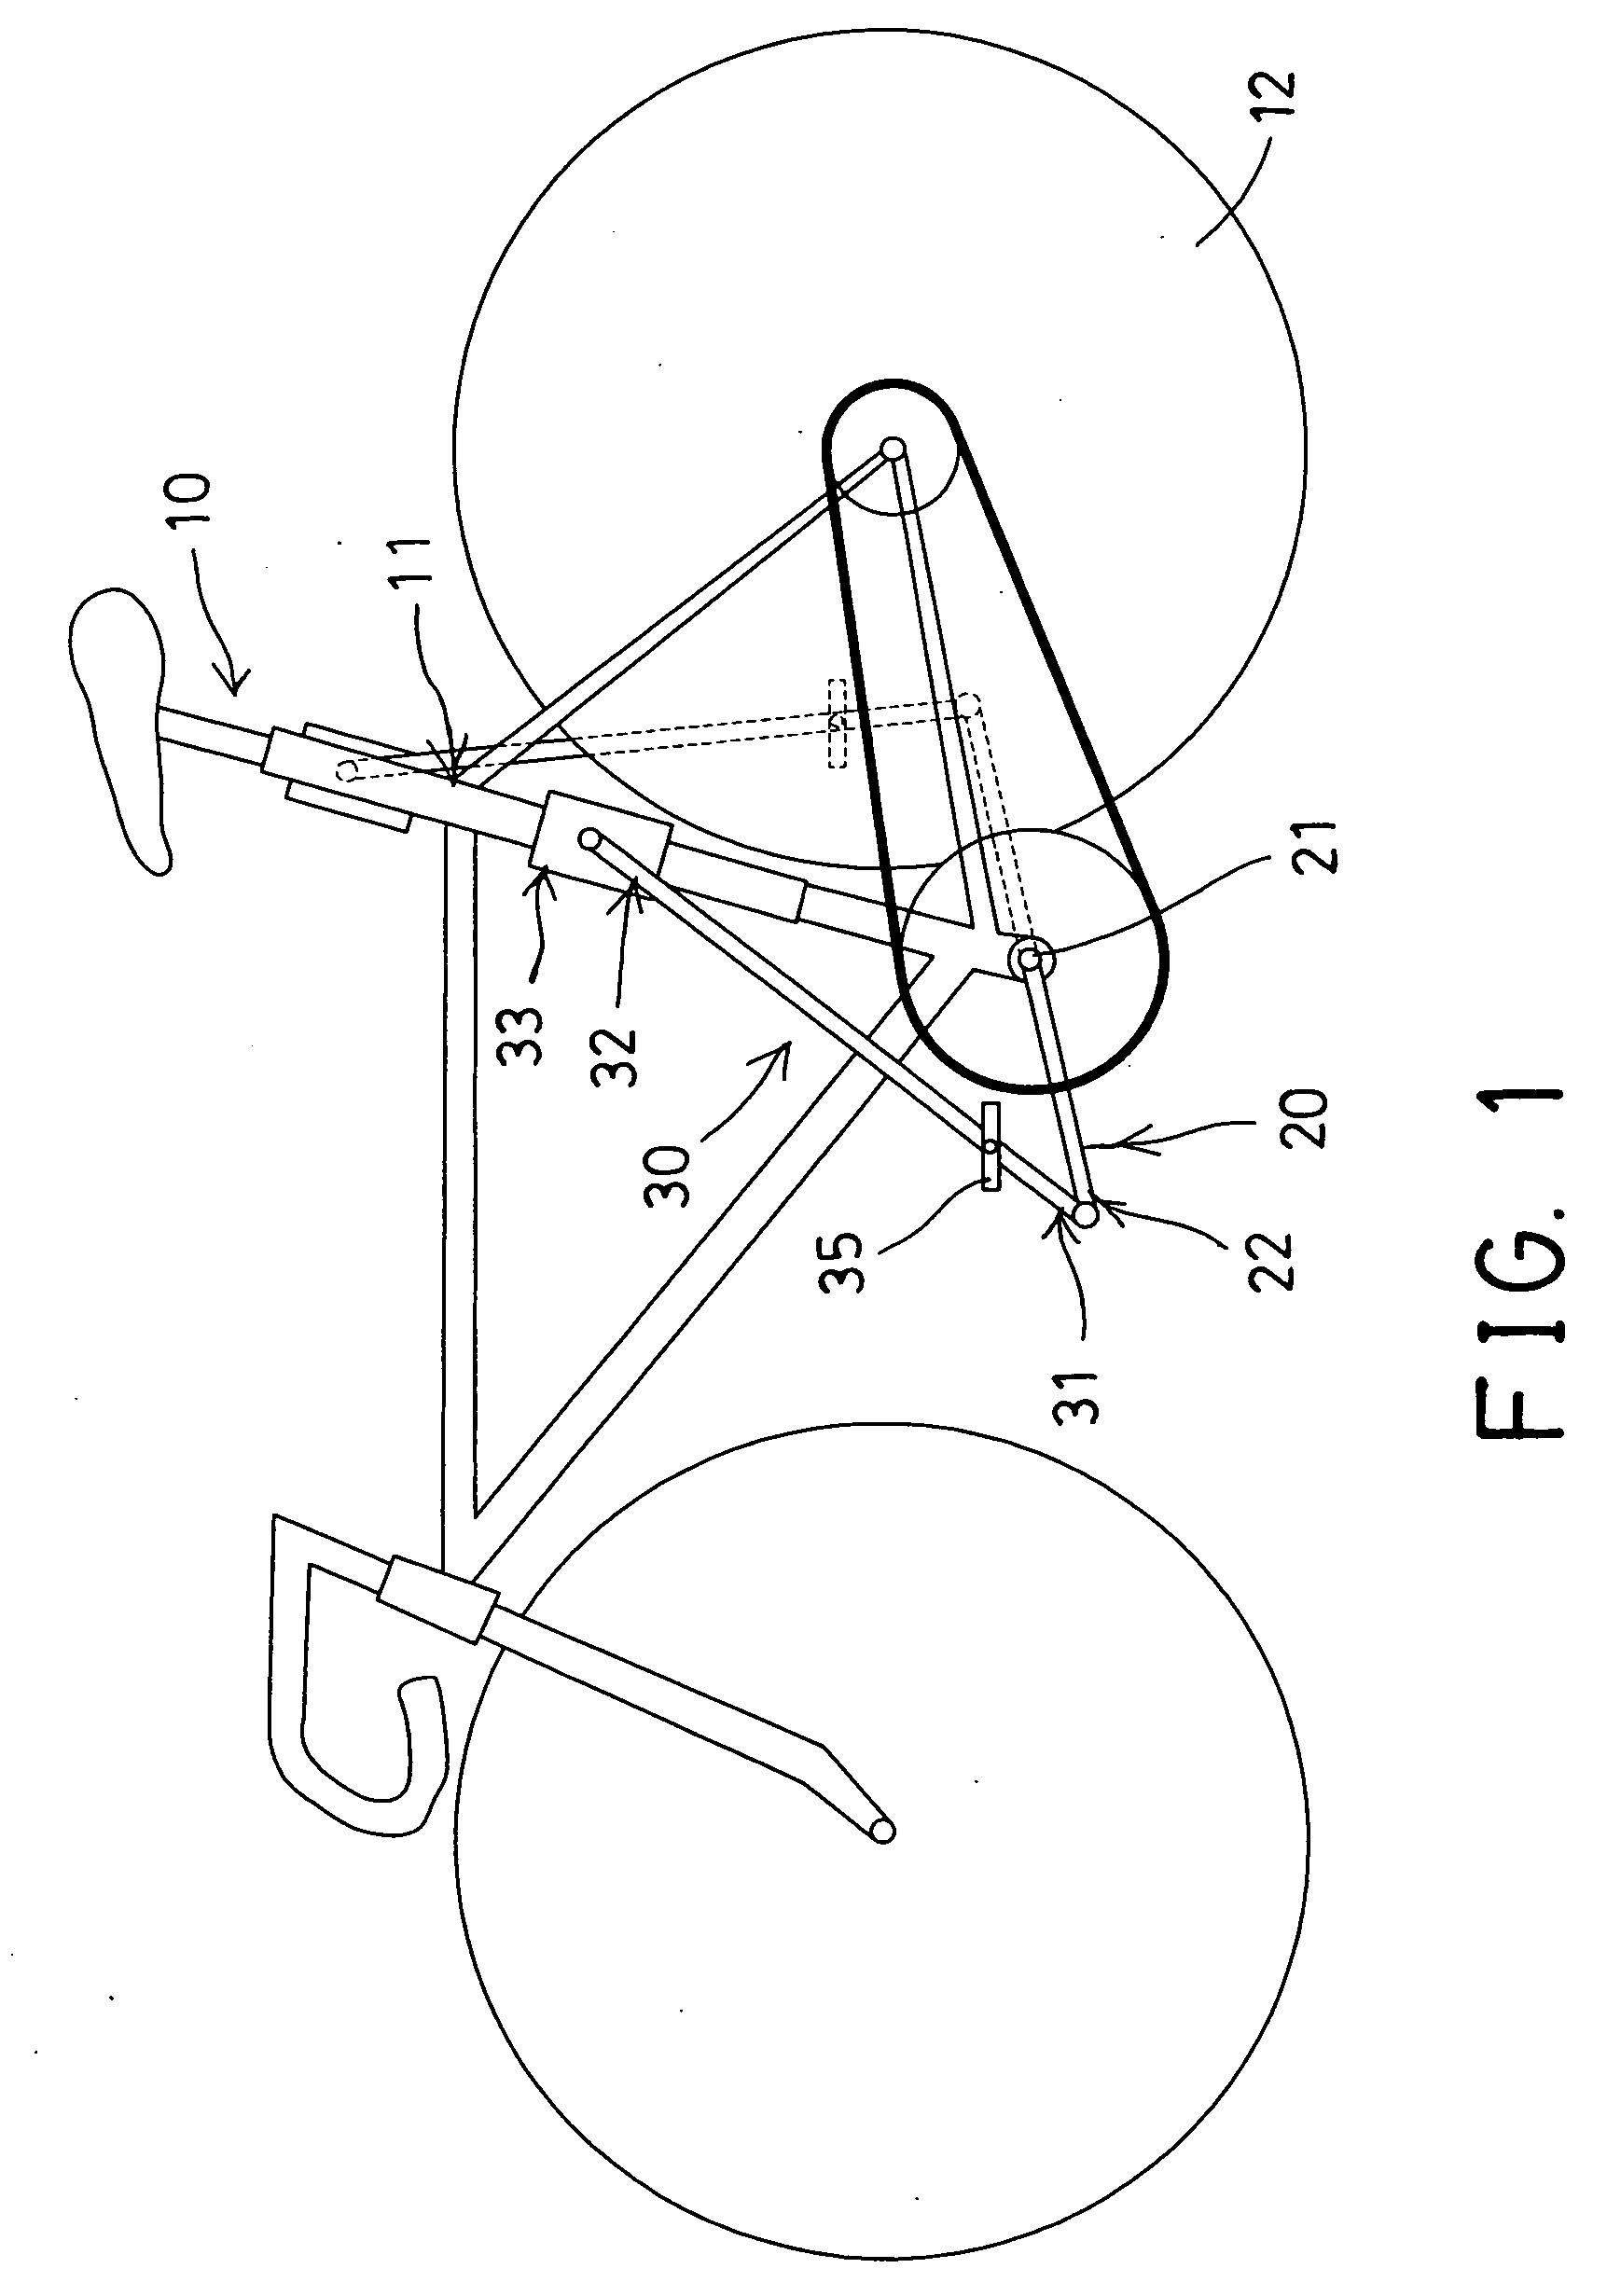 Cycle propelling mechanism